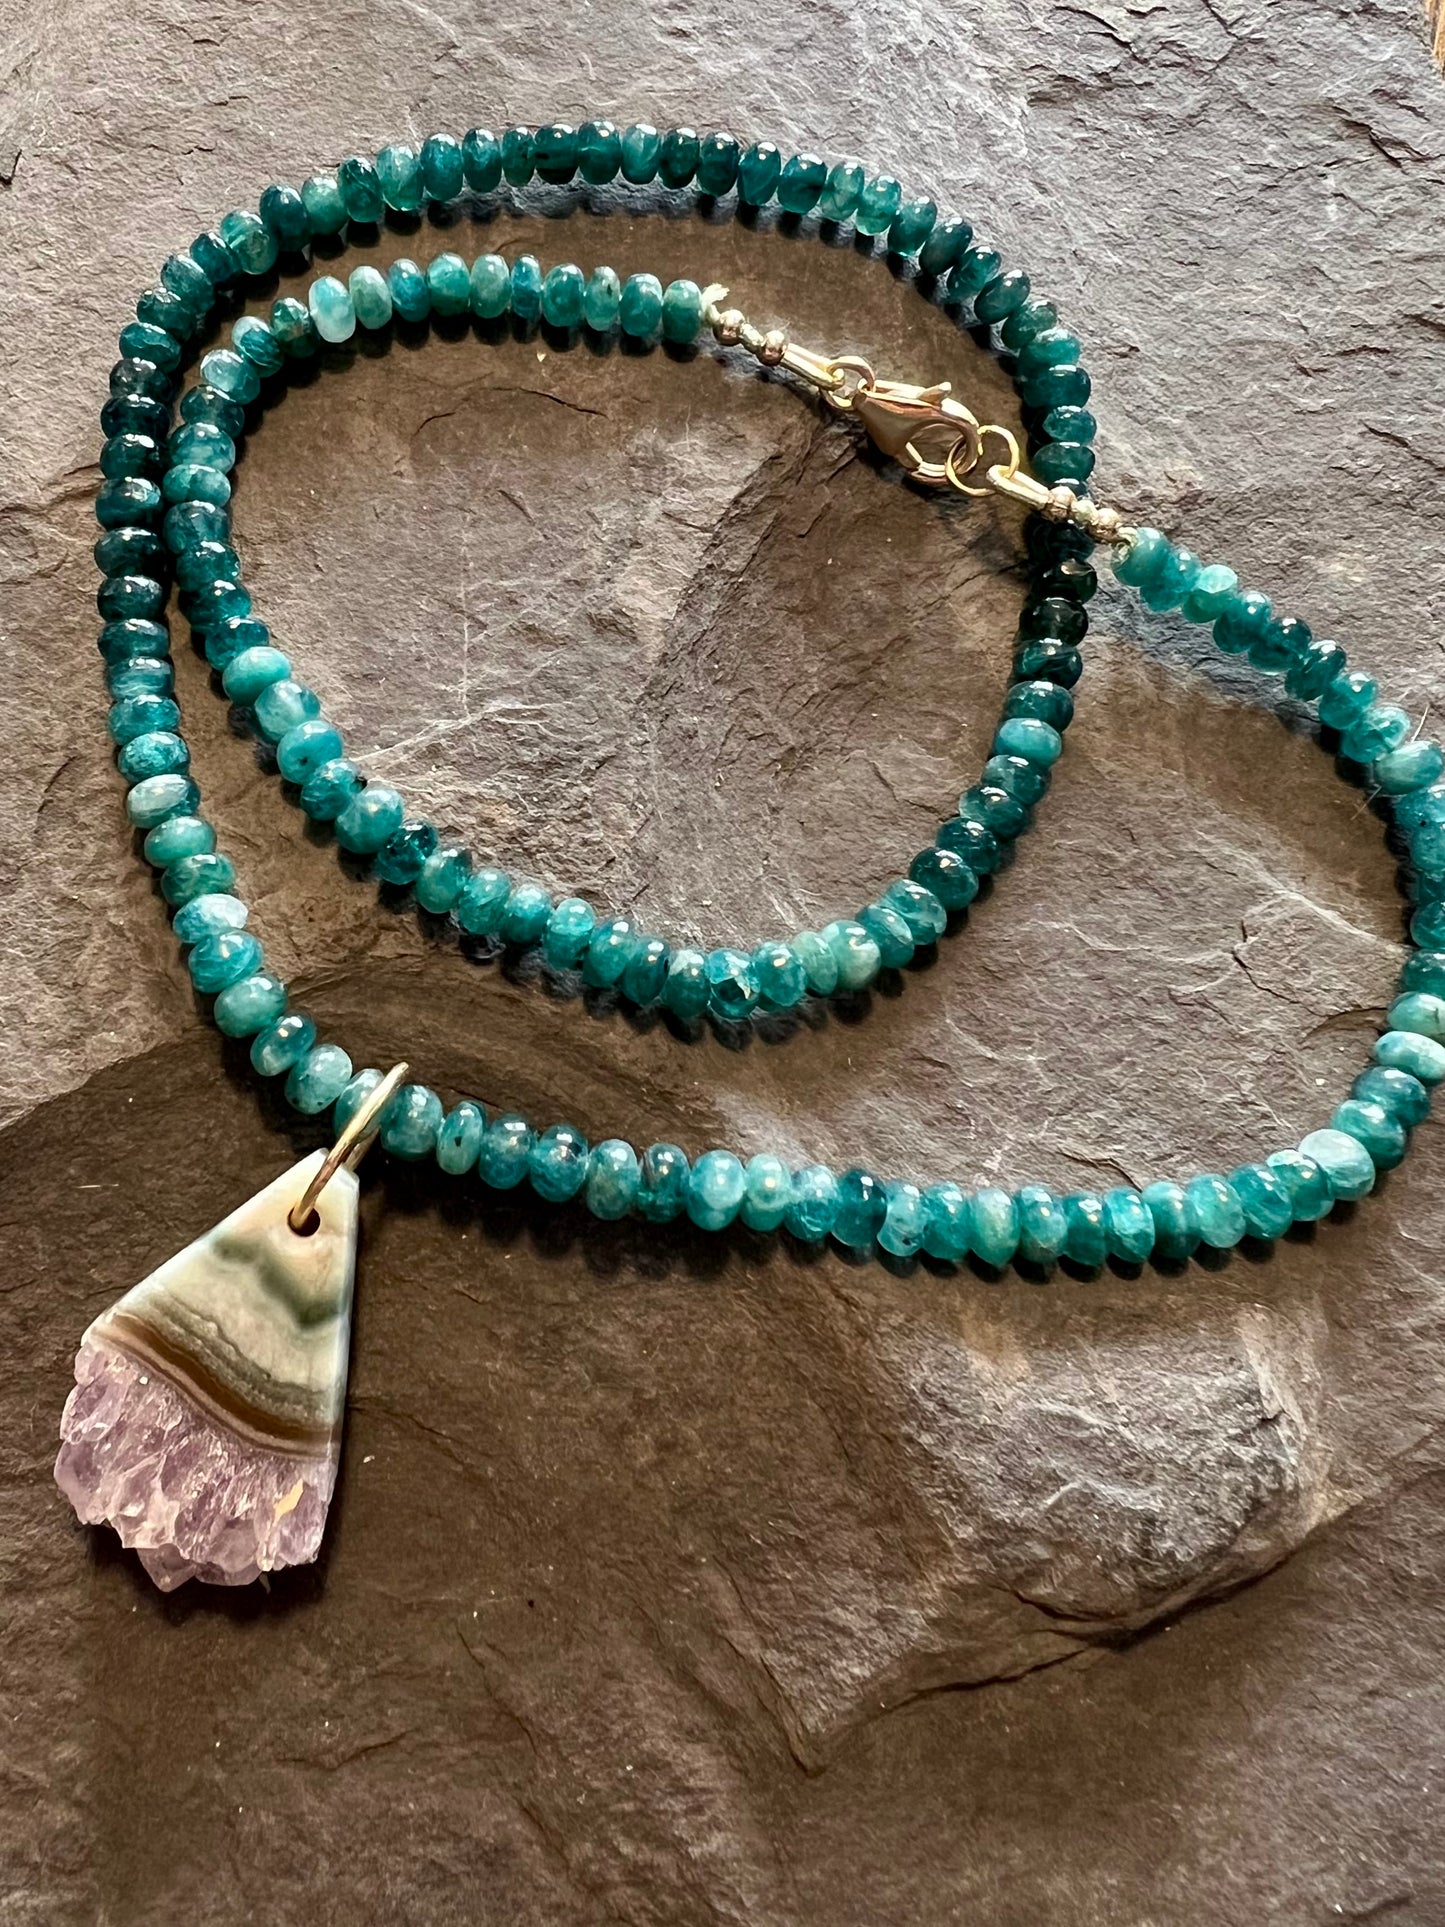 Druzy Amethyst Slab Pendant - One of a Kind Necklace